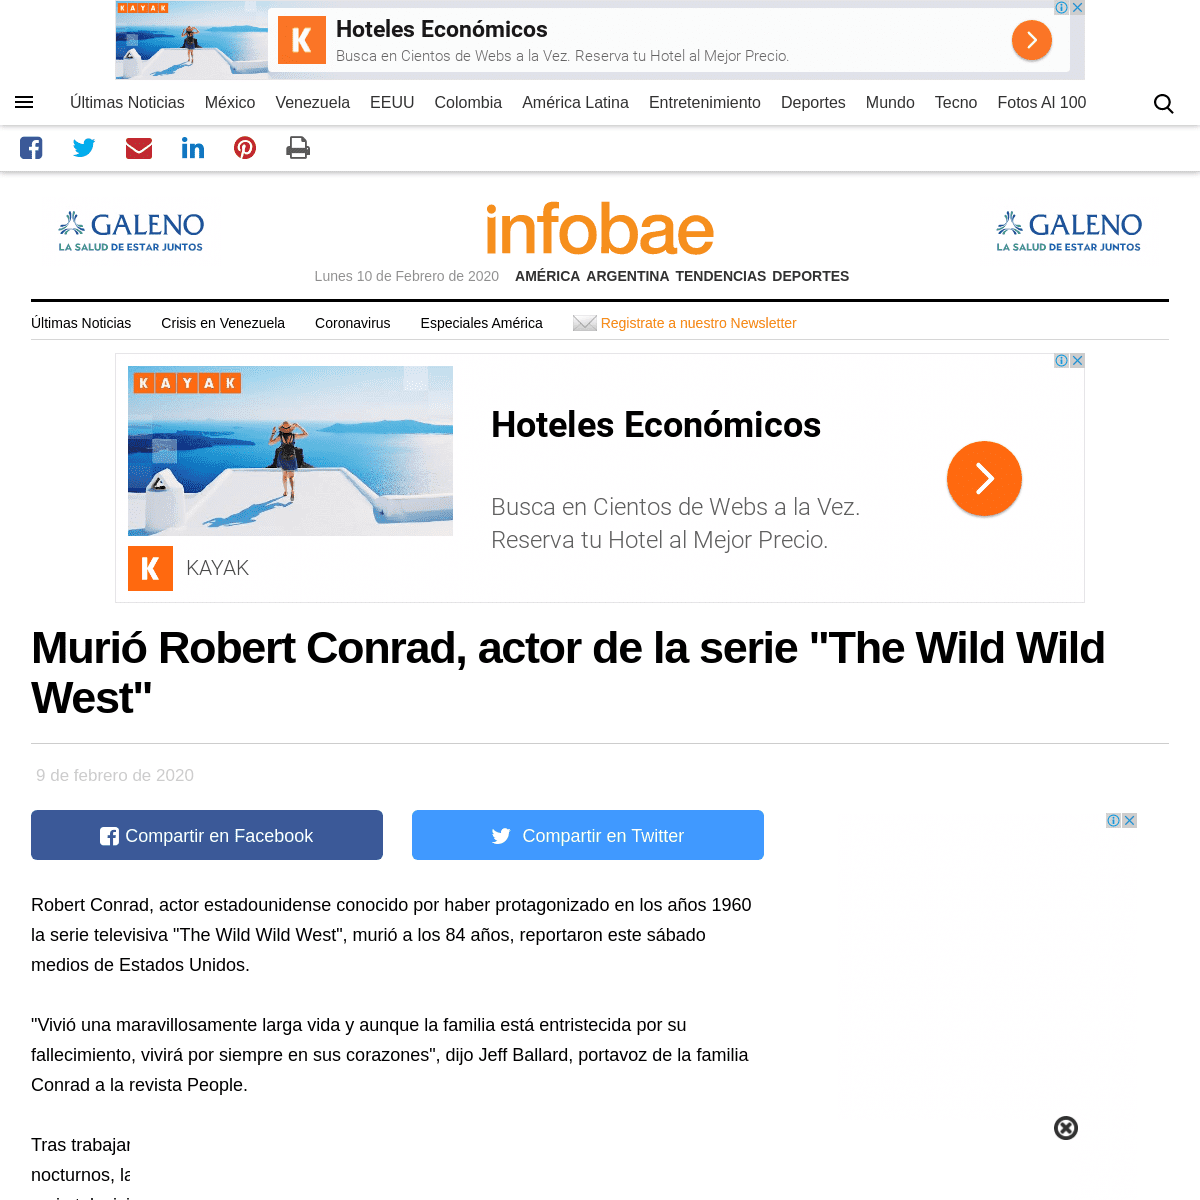 A complete backup of www.infobae.com/america/agencias/2020/02/09/muere-robert-conrad-actor-de-la-teleserie-the-wild-wild-west-se